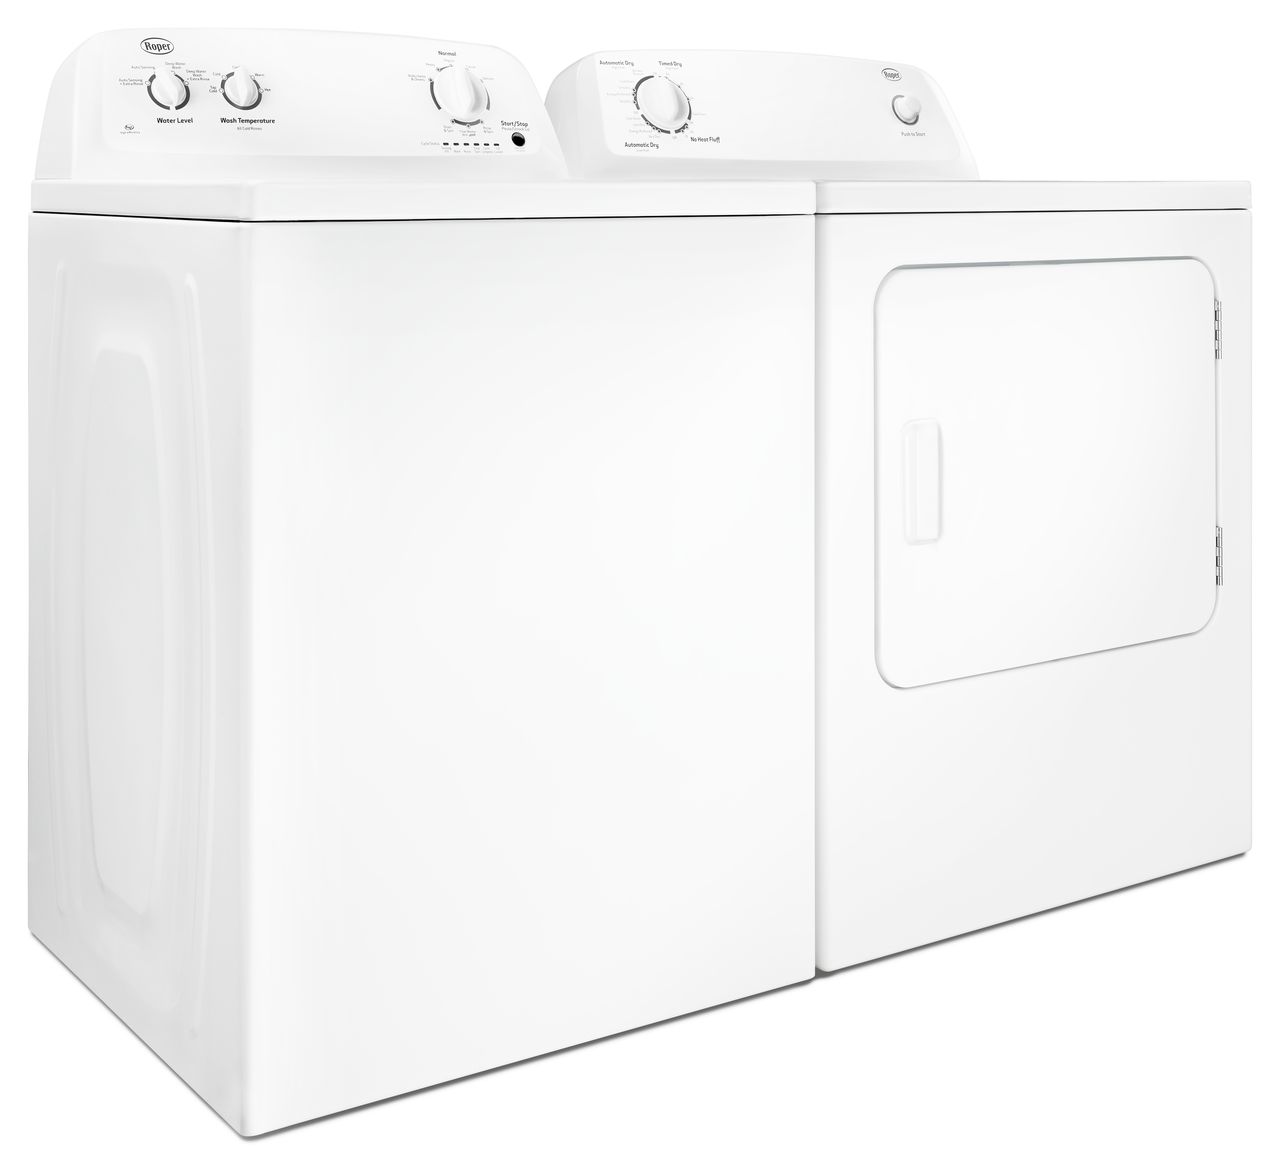 3 Whirlpool Dryer Not Heating Diagnosing Common Issues Youtube Whirlpool Dryer Whirlpool Dryer